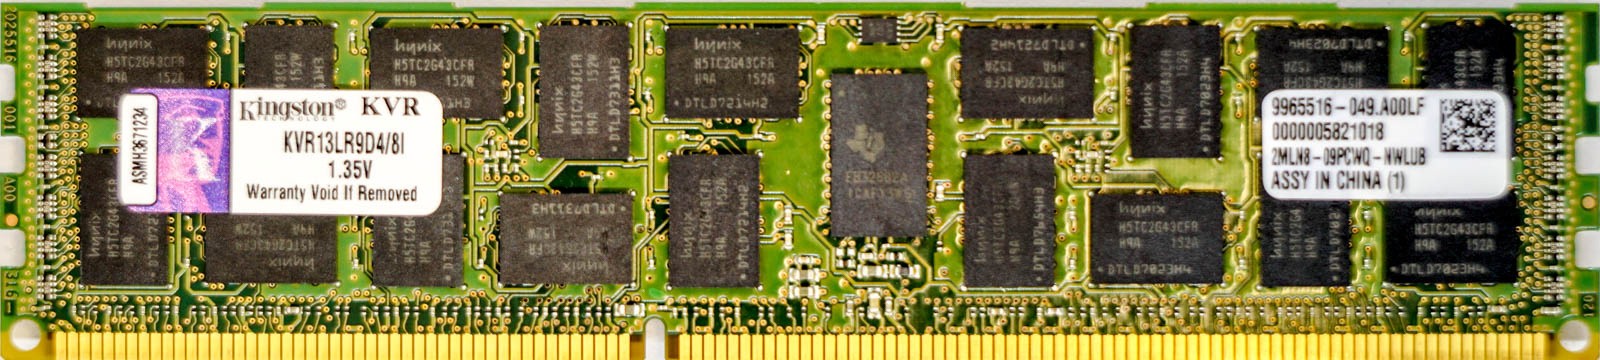 Kingston - 8GB PC3L-10600R (DDR3 Low-Power-1333Mhz, 2RX4)